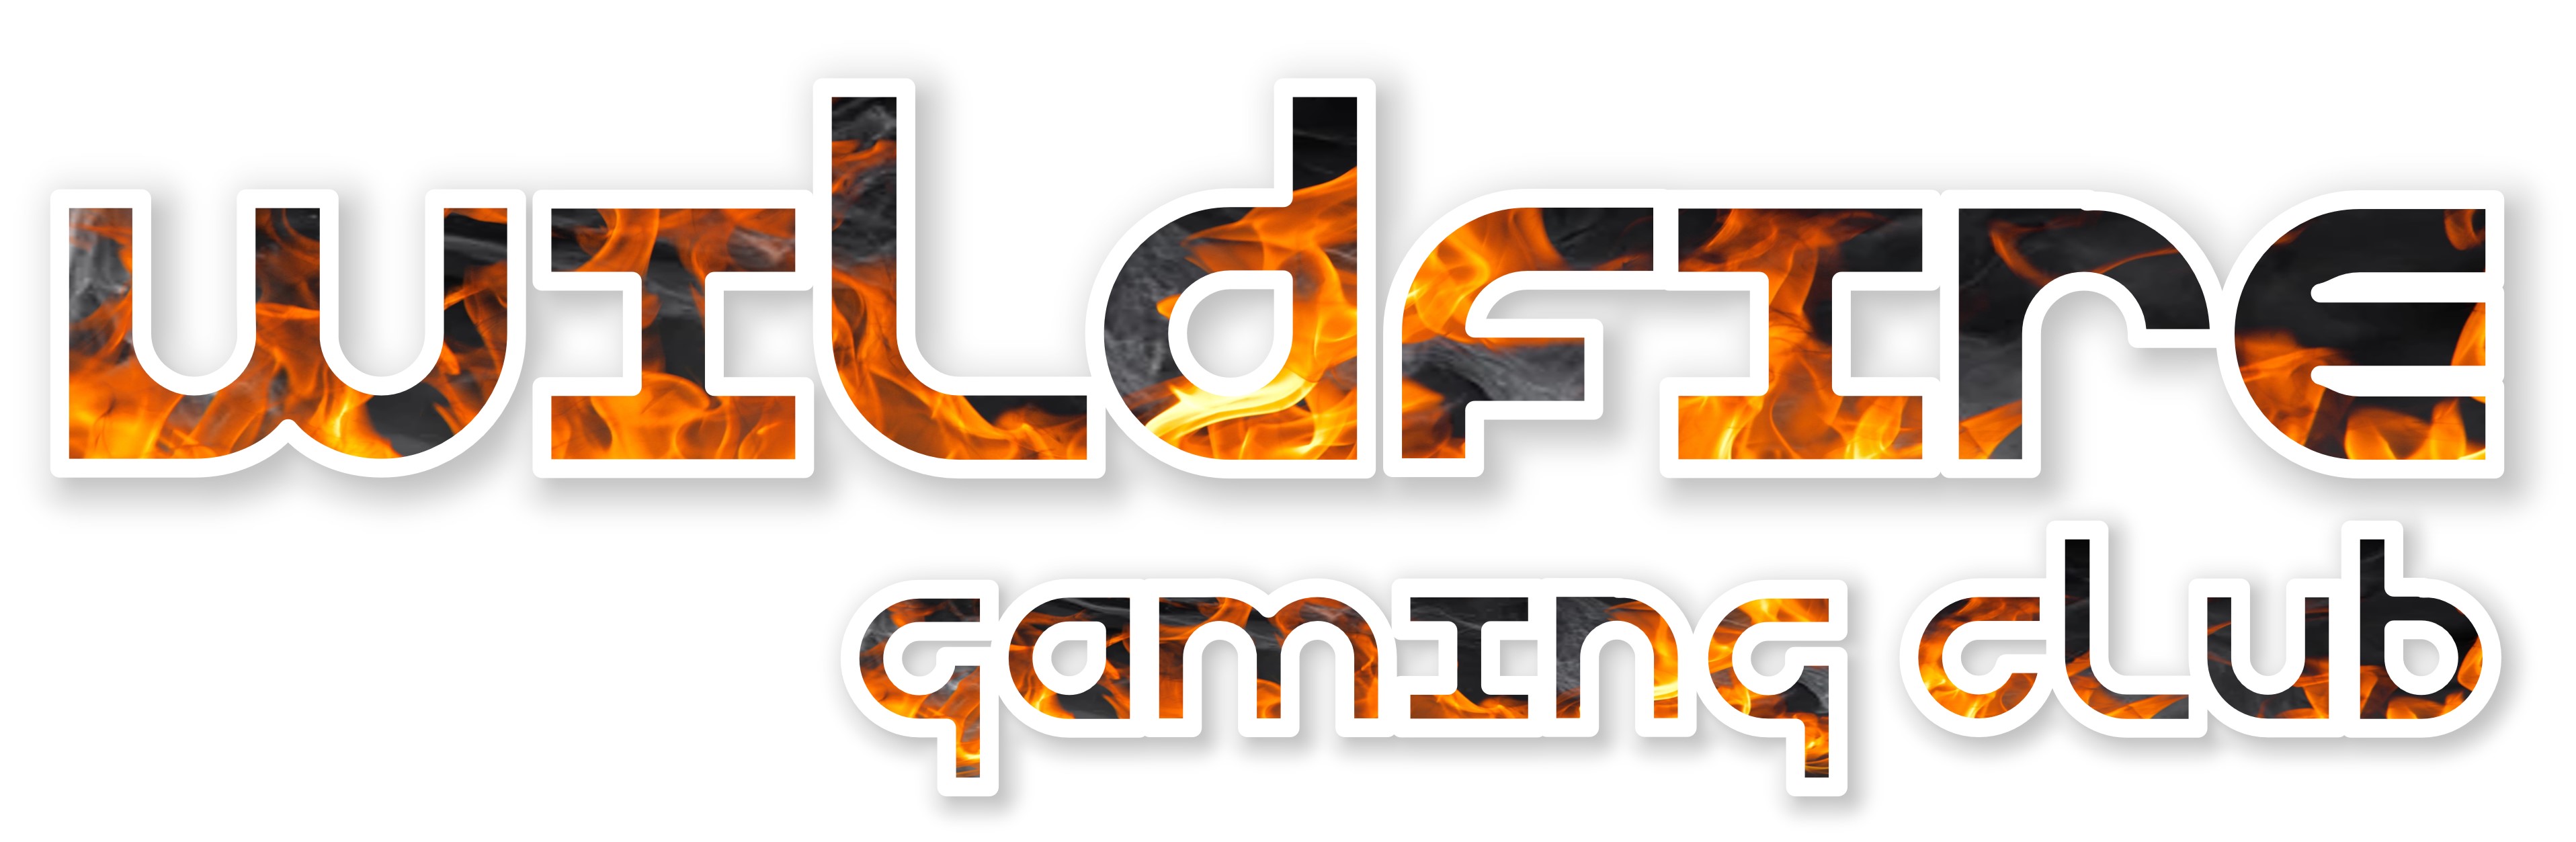 Wildfire Gaming logo light